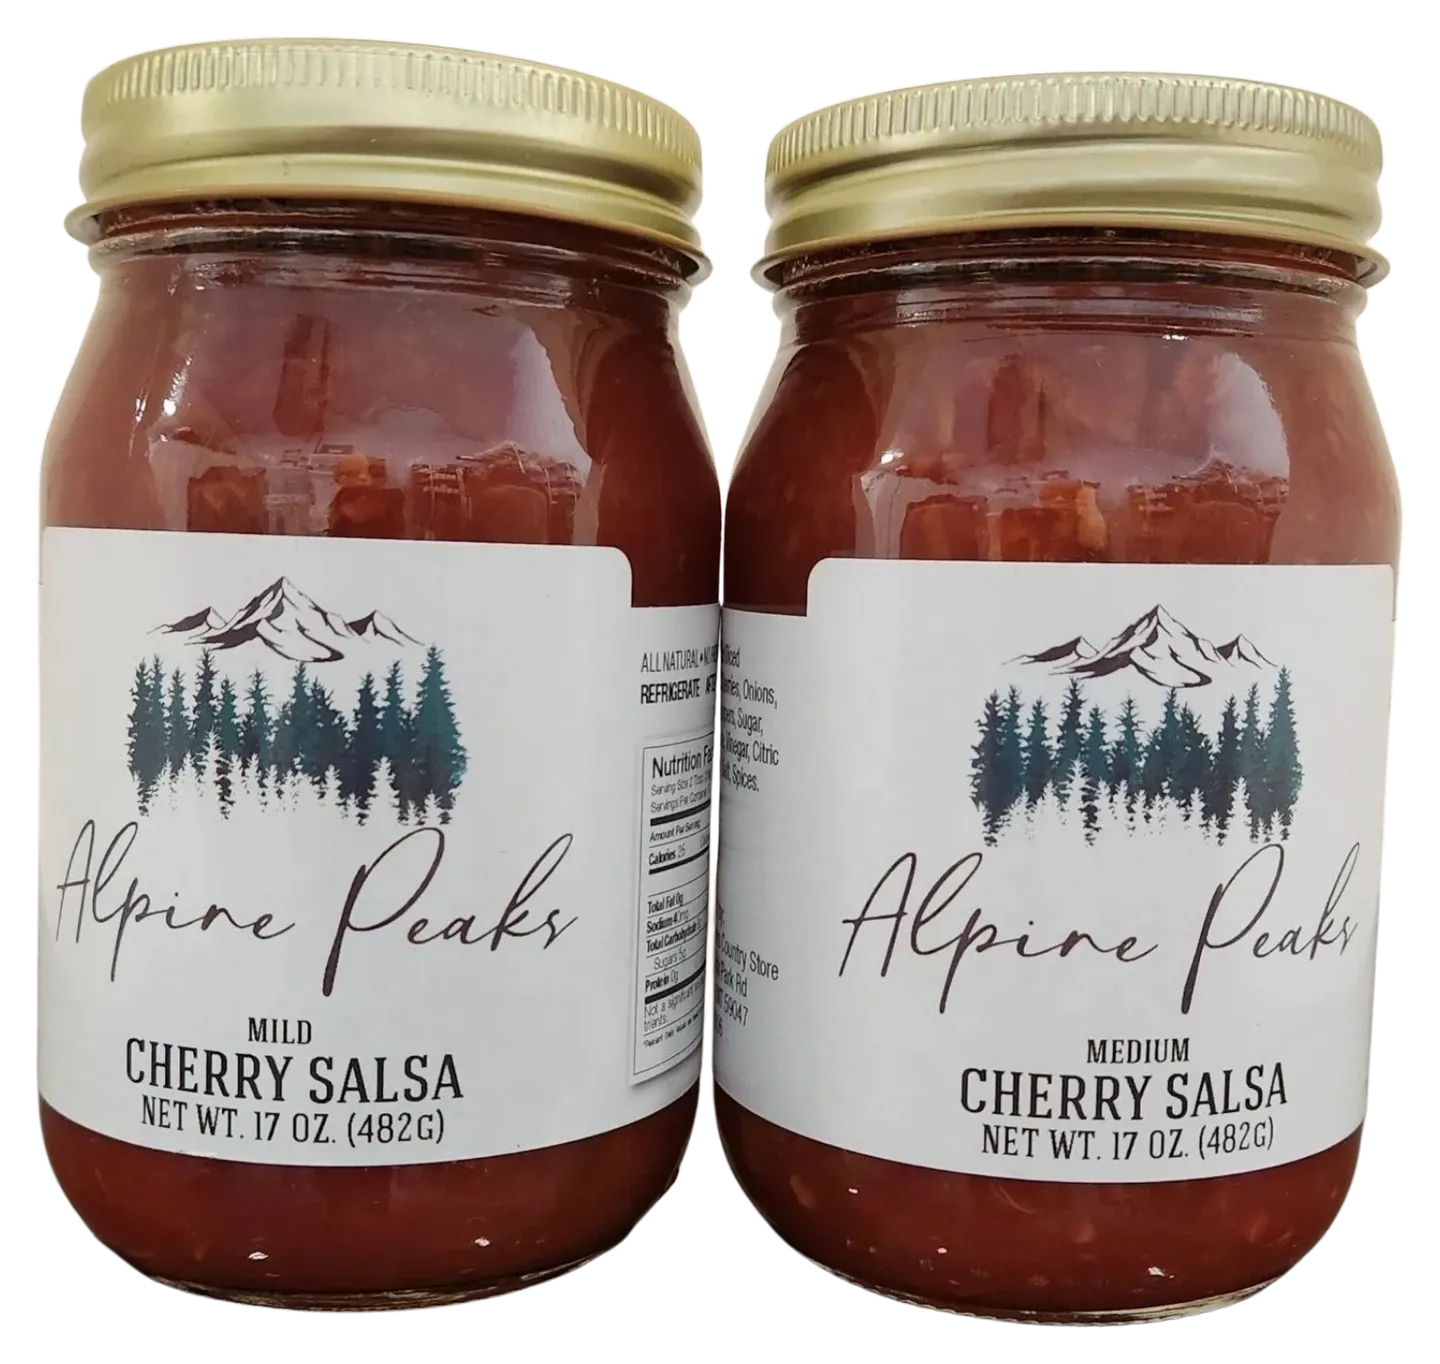 mild and medium cherry salsa